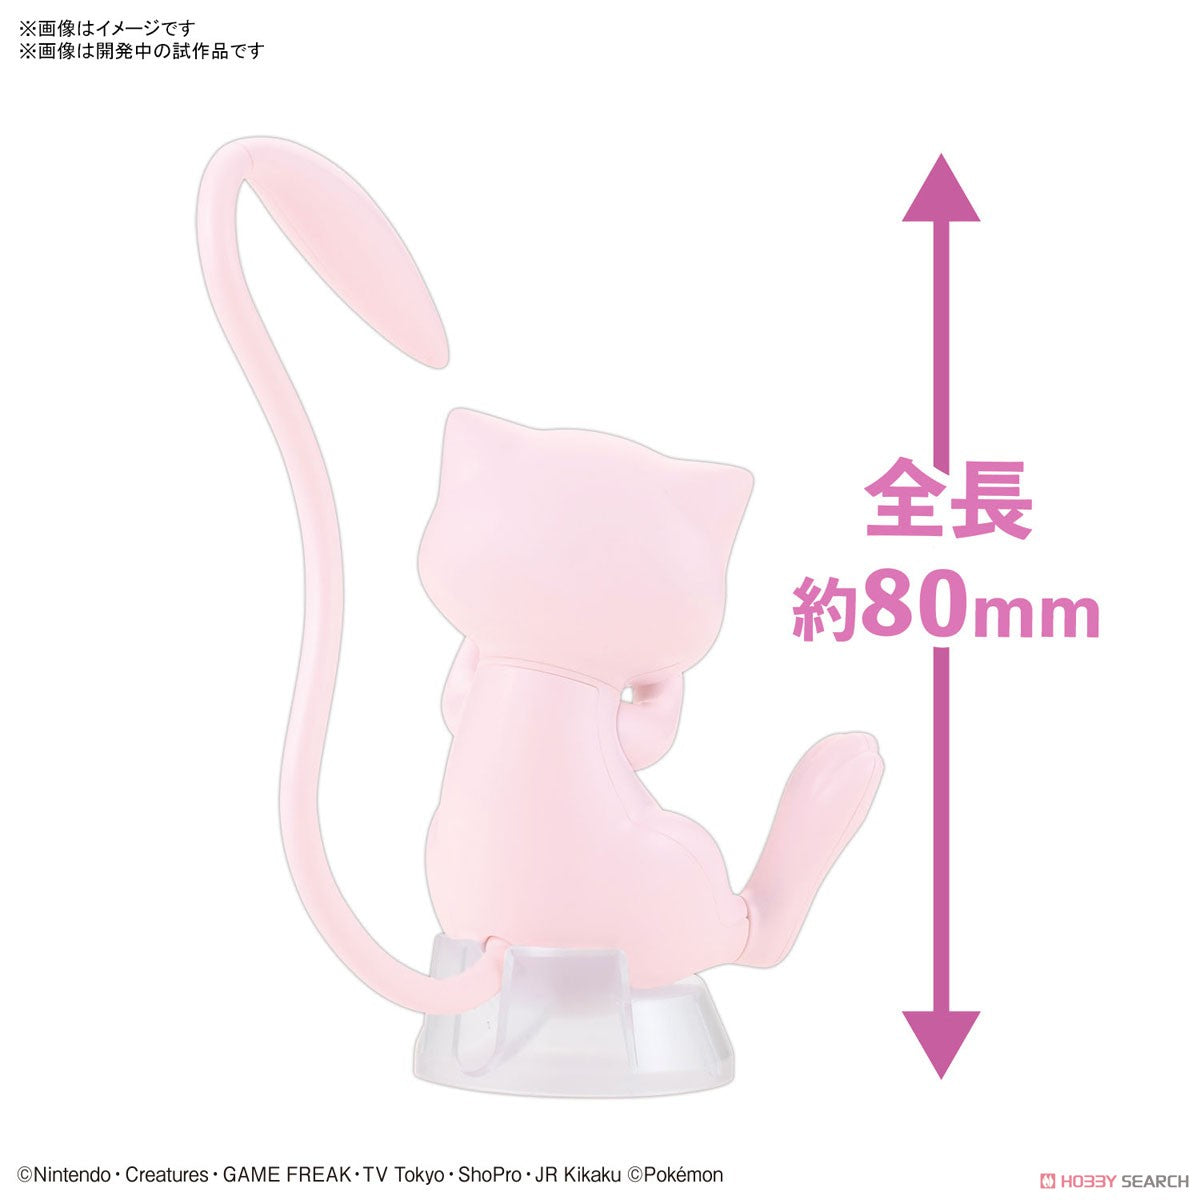 [PREORDER] Pokemon Plastic Model Collection Quick!! 02 Mew